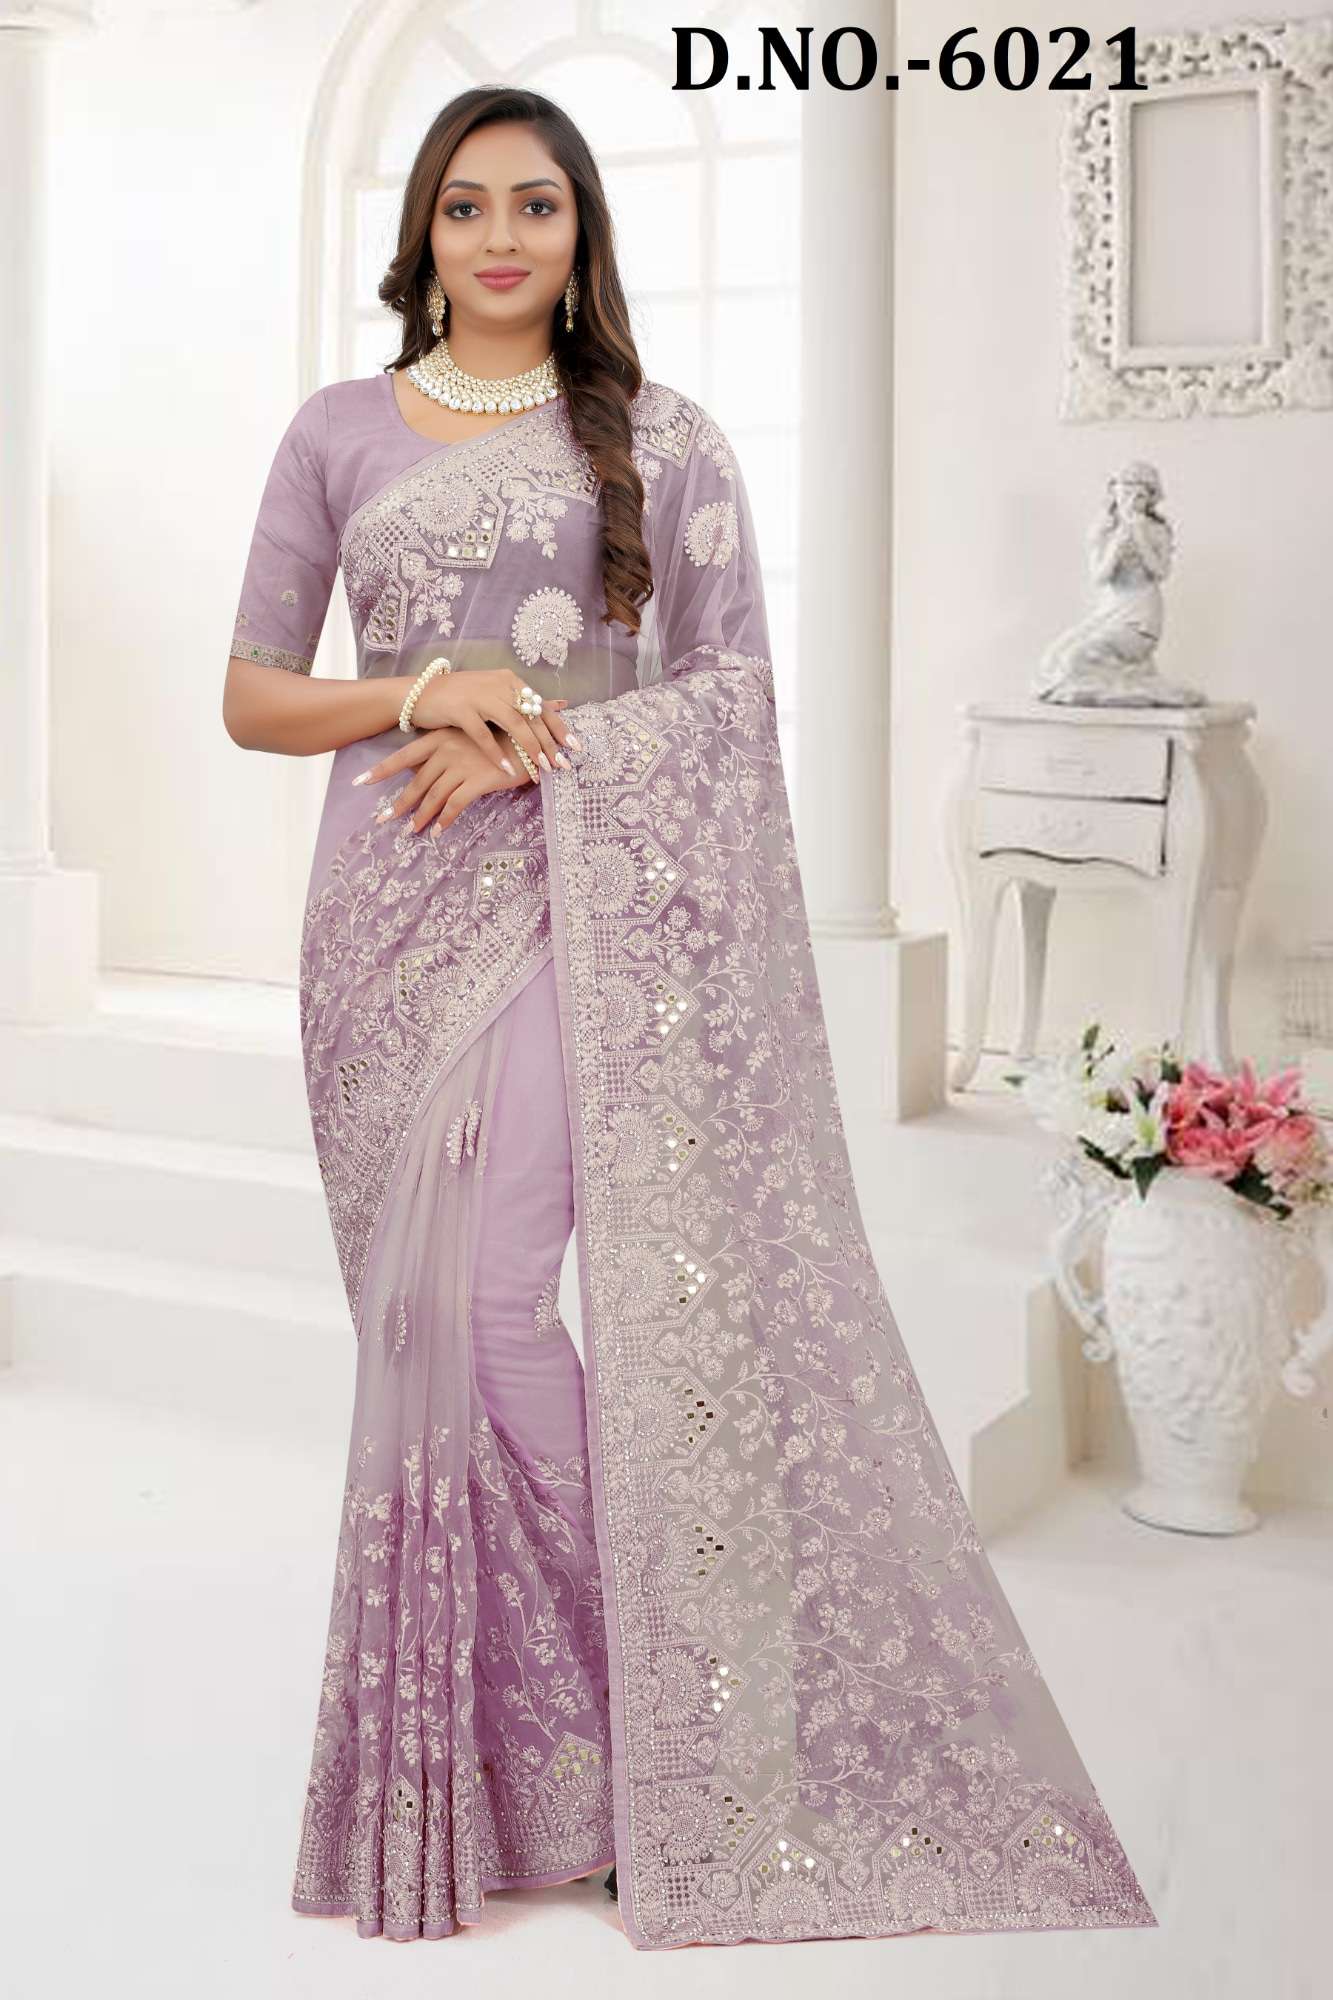 balaji emporium presents zorista dno 6021 6030 indian women designer net saree with blouse party cocktail wedding wear sari collection 2022 07 10 15 01 56